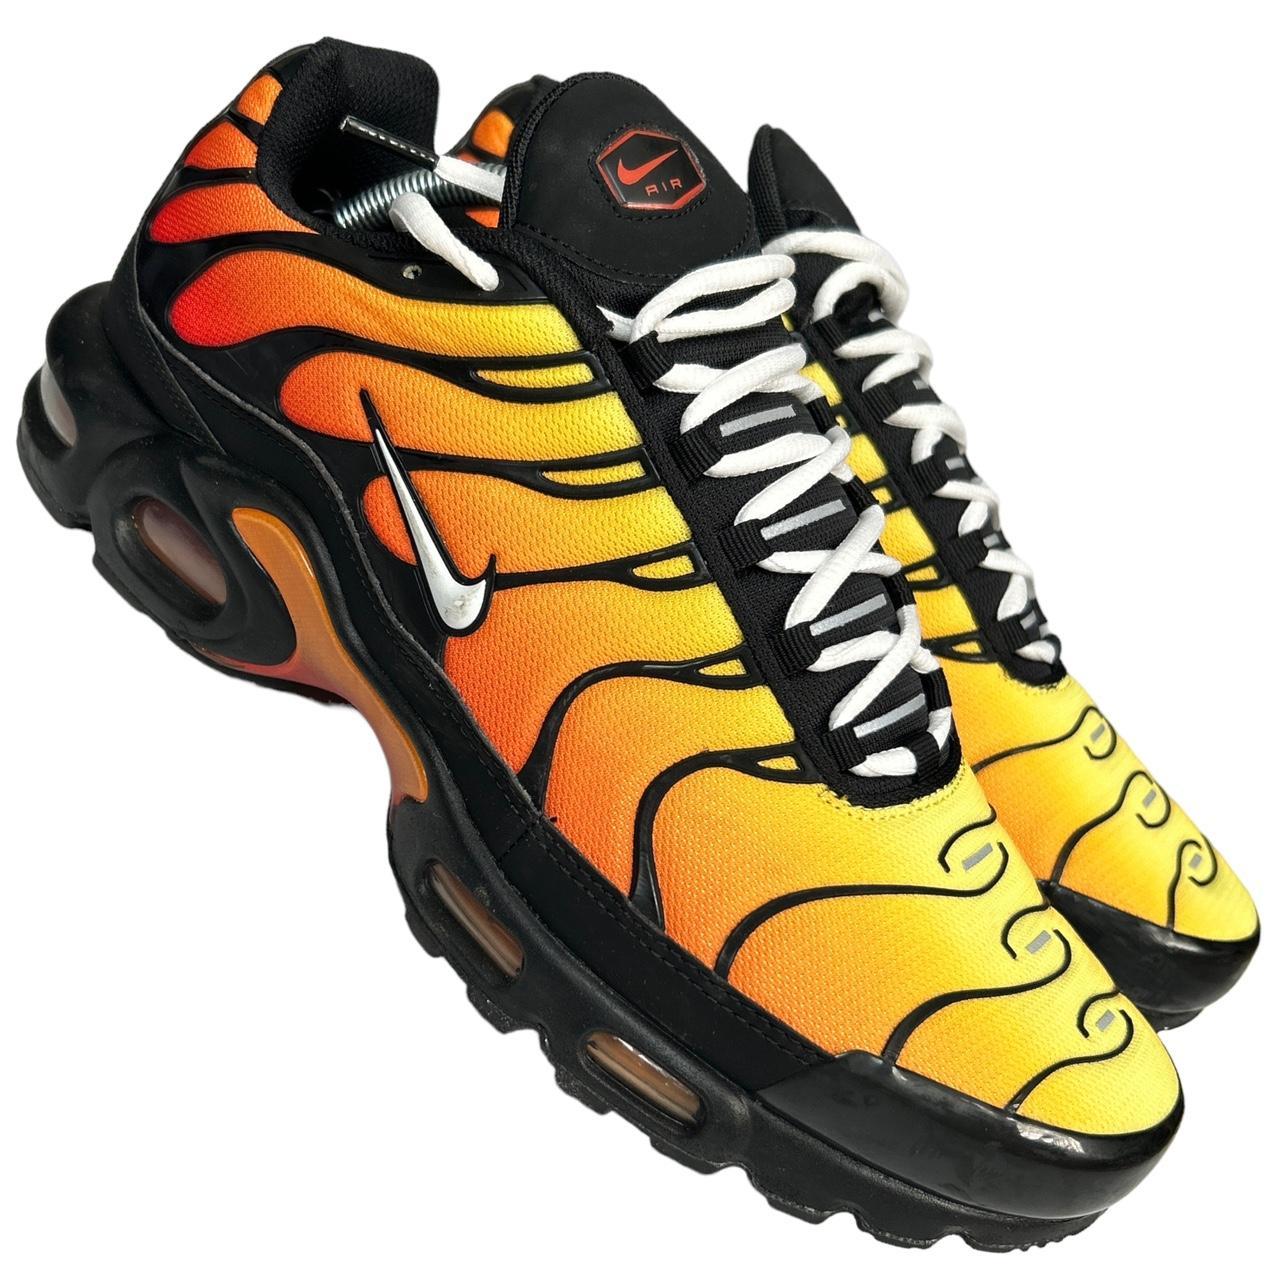 Nike Tn Tiger (UK 10.5)